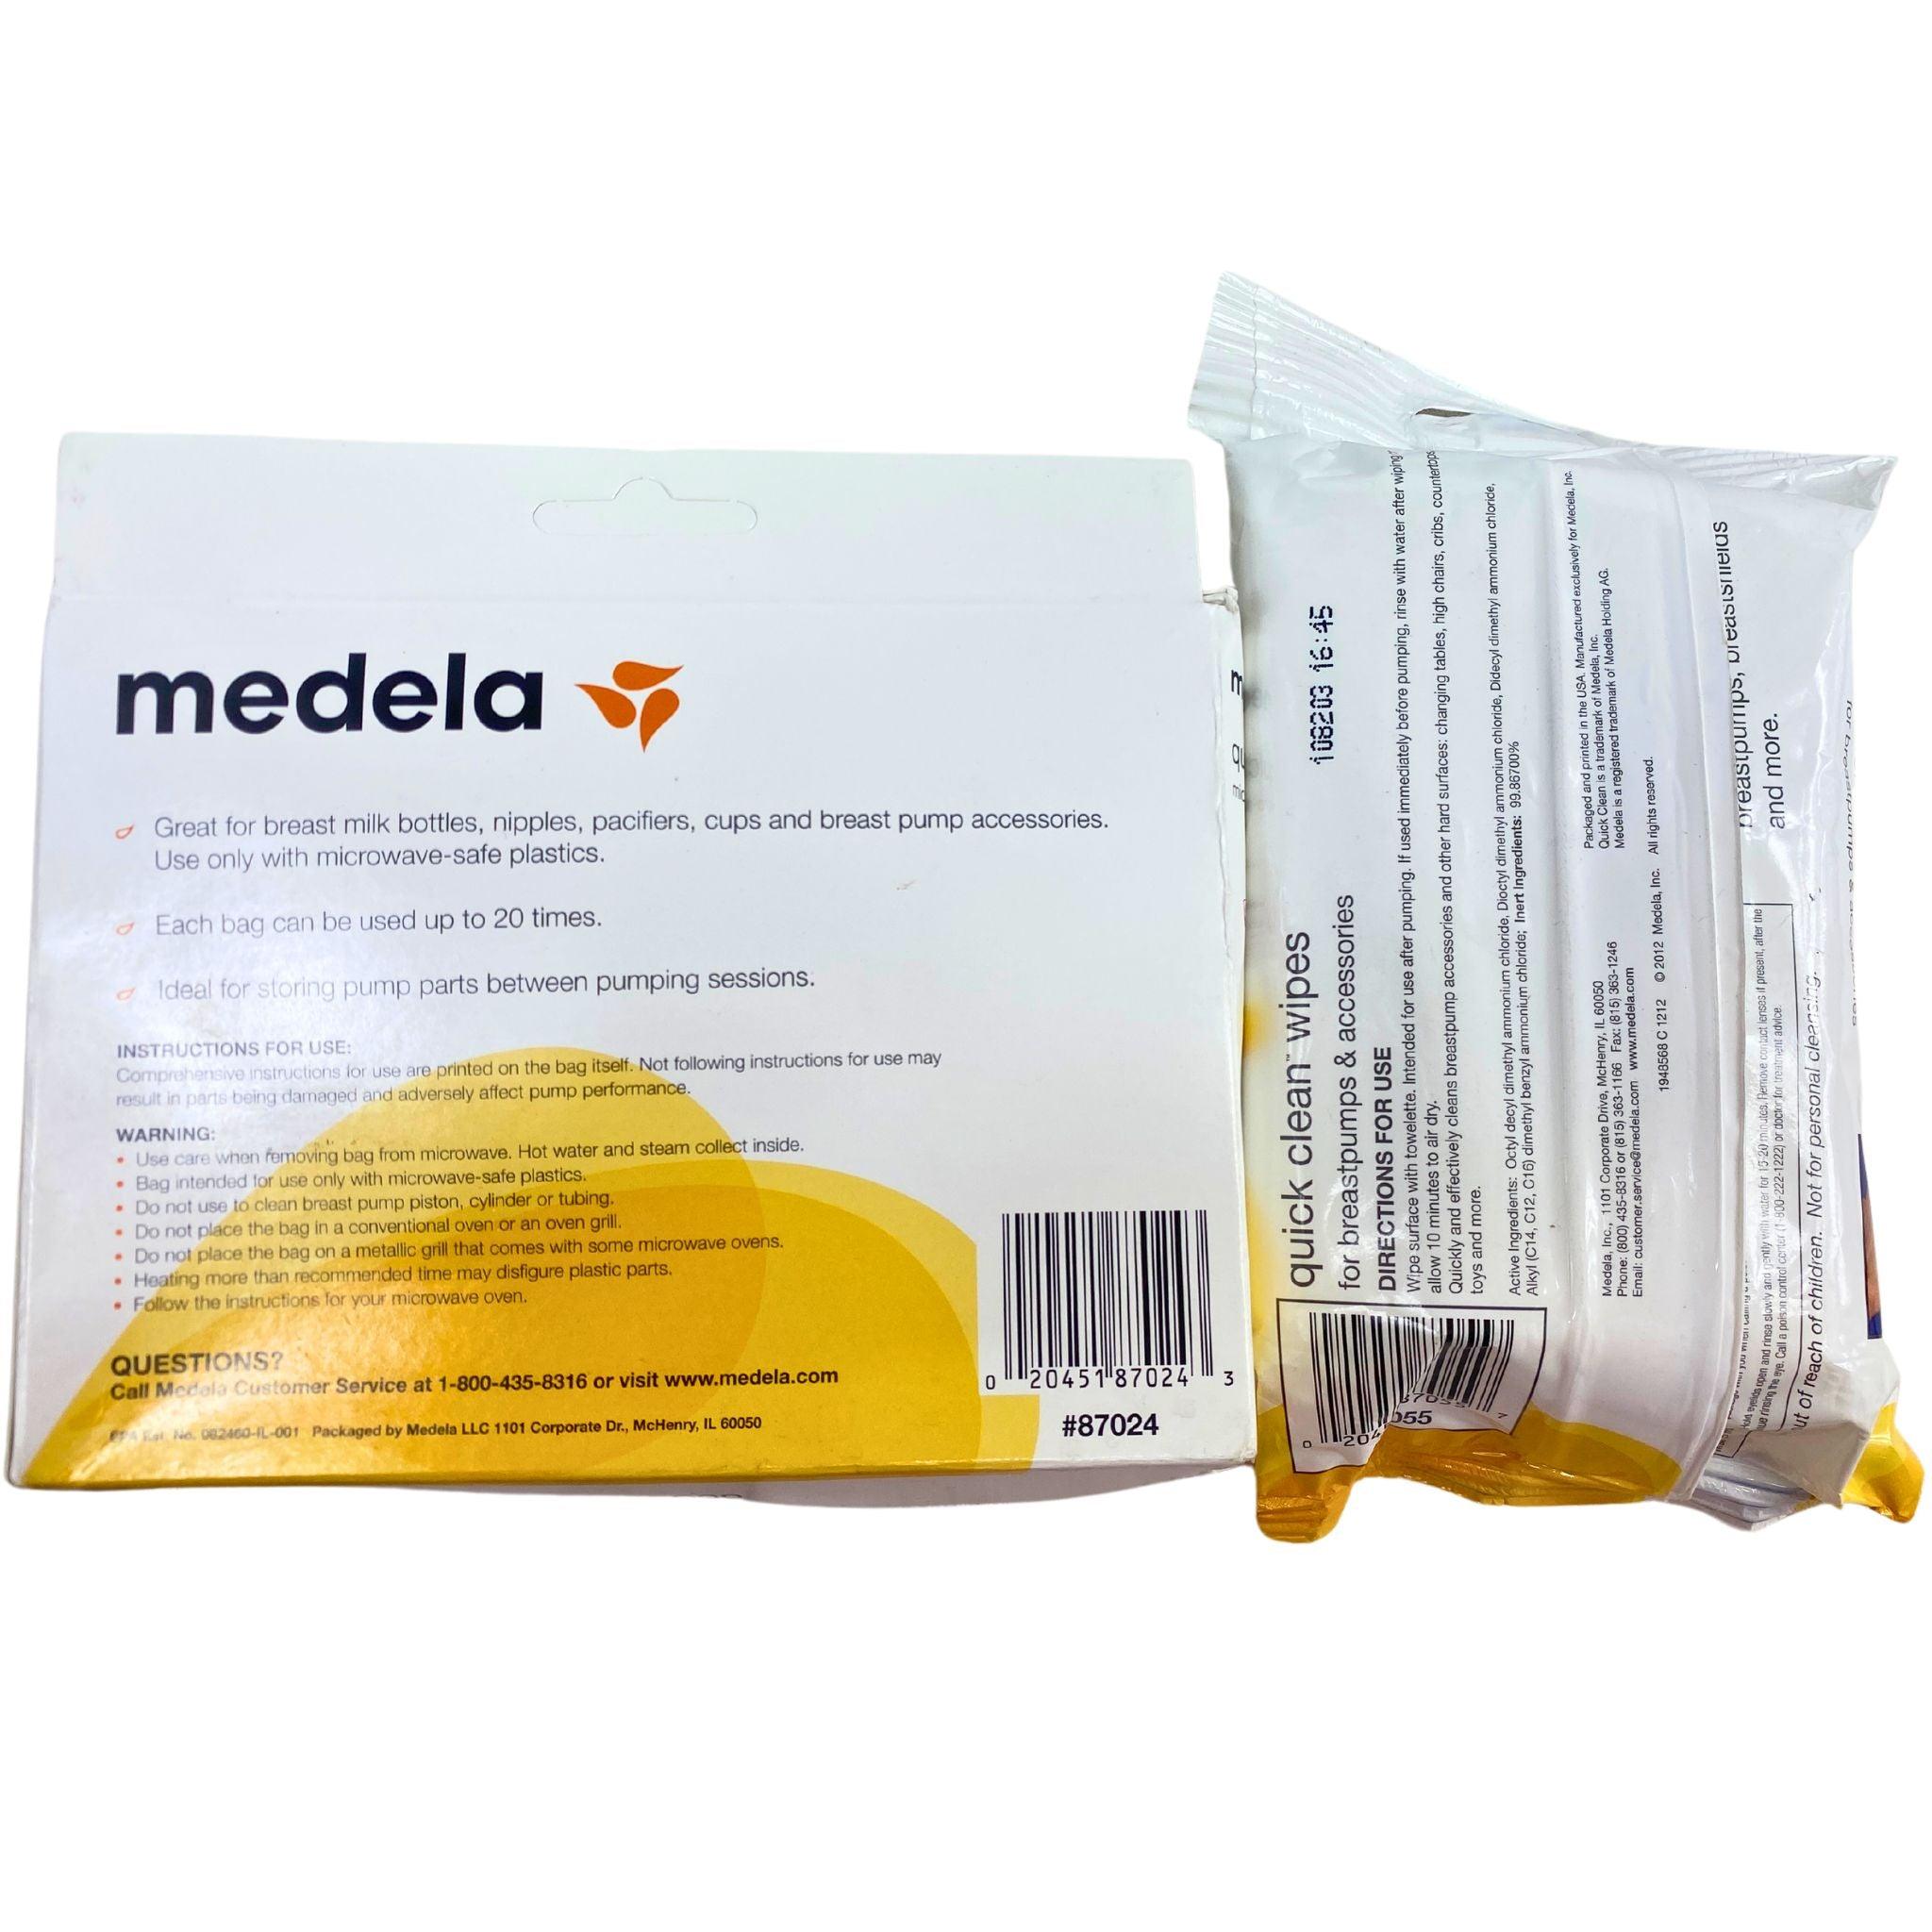 Medela Quick Clean Micro-Steam  Discount wholesalers Inc – Discount  Wholesalers Inc